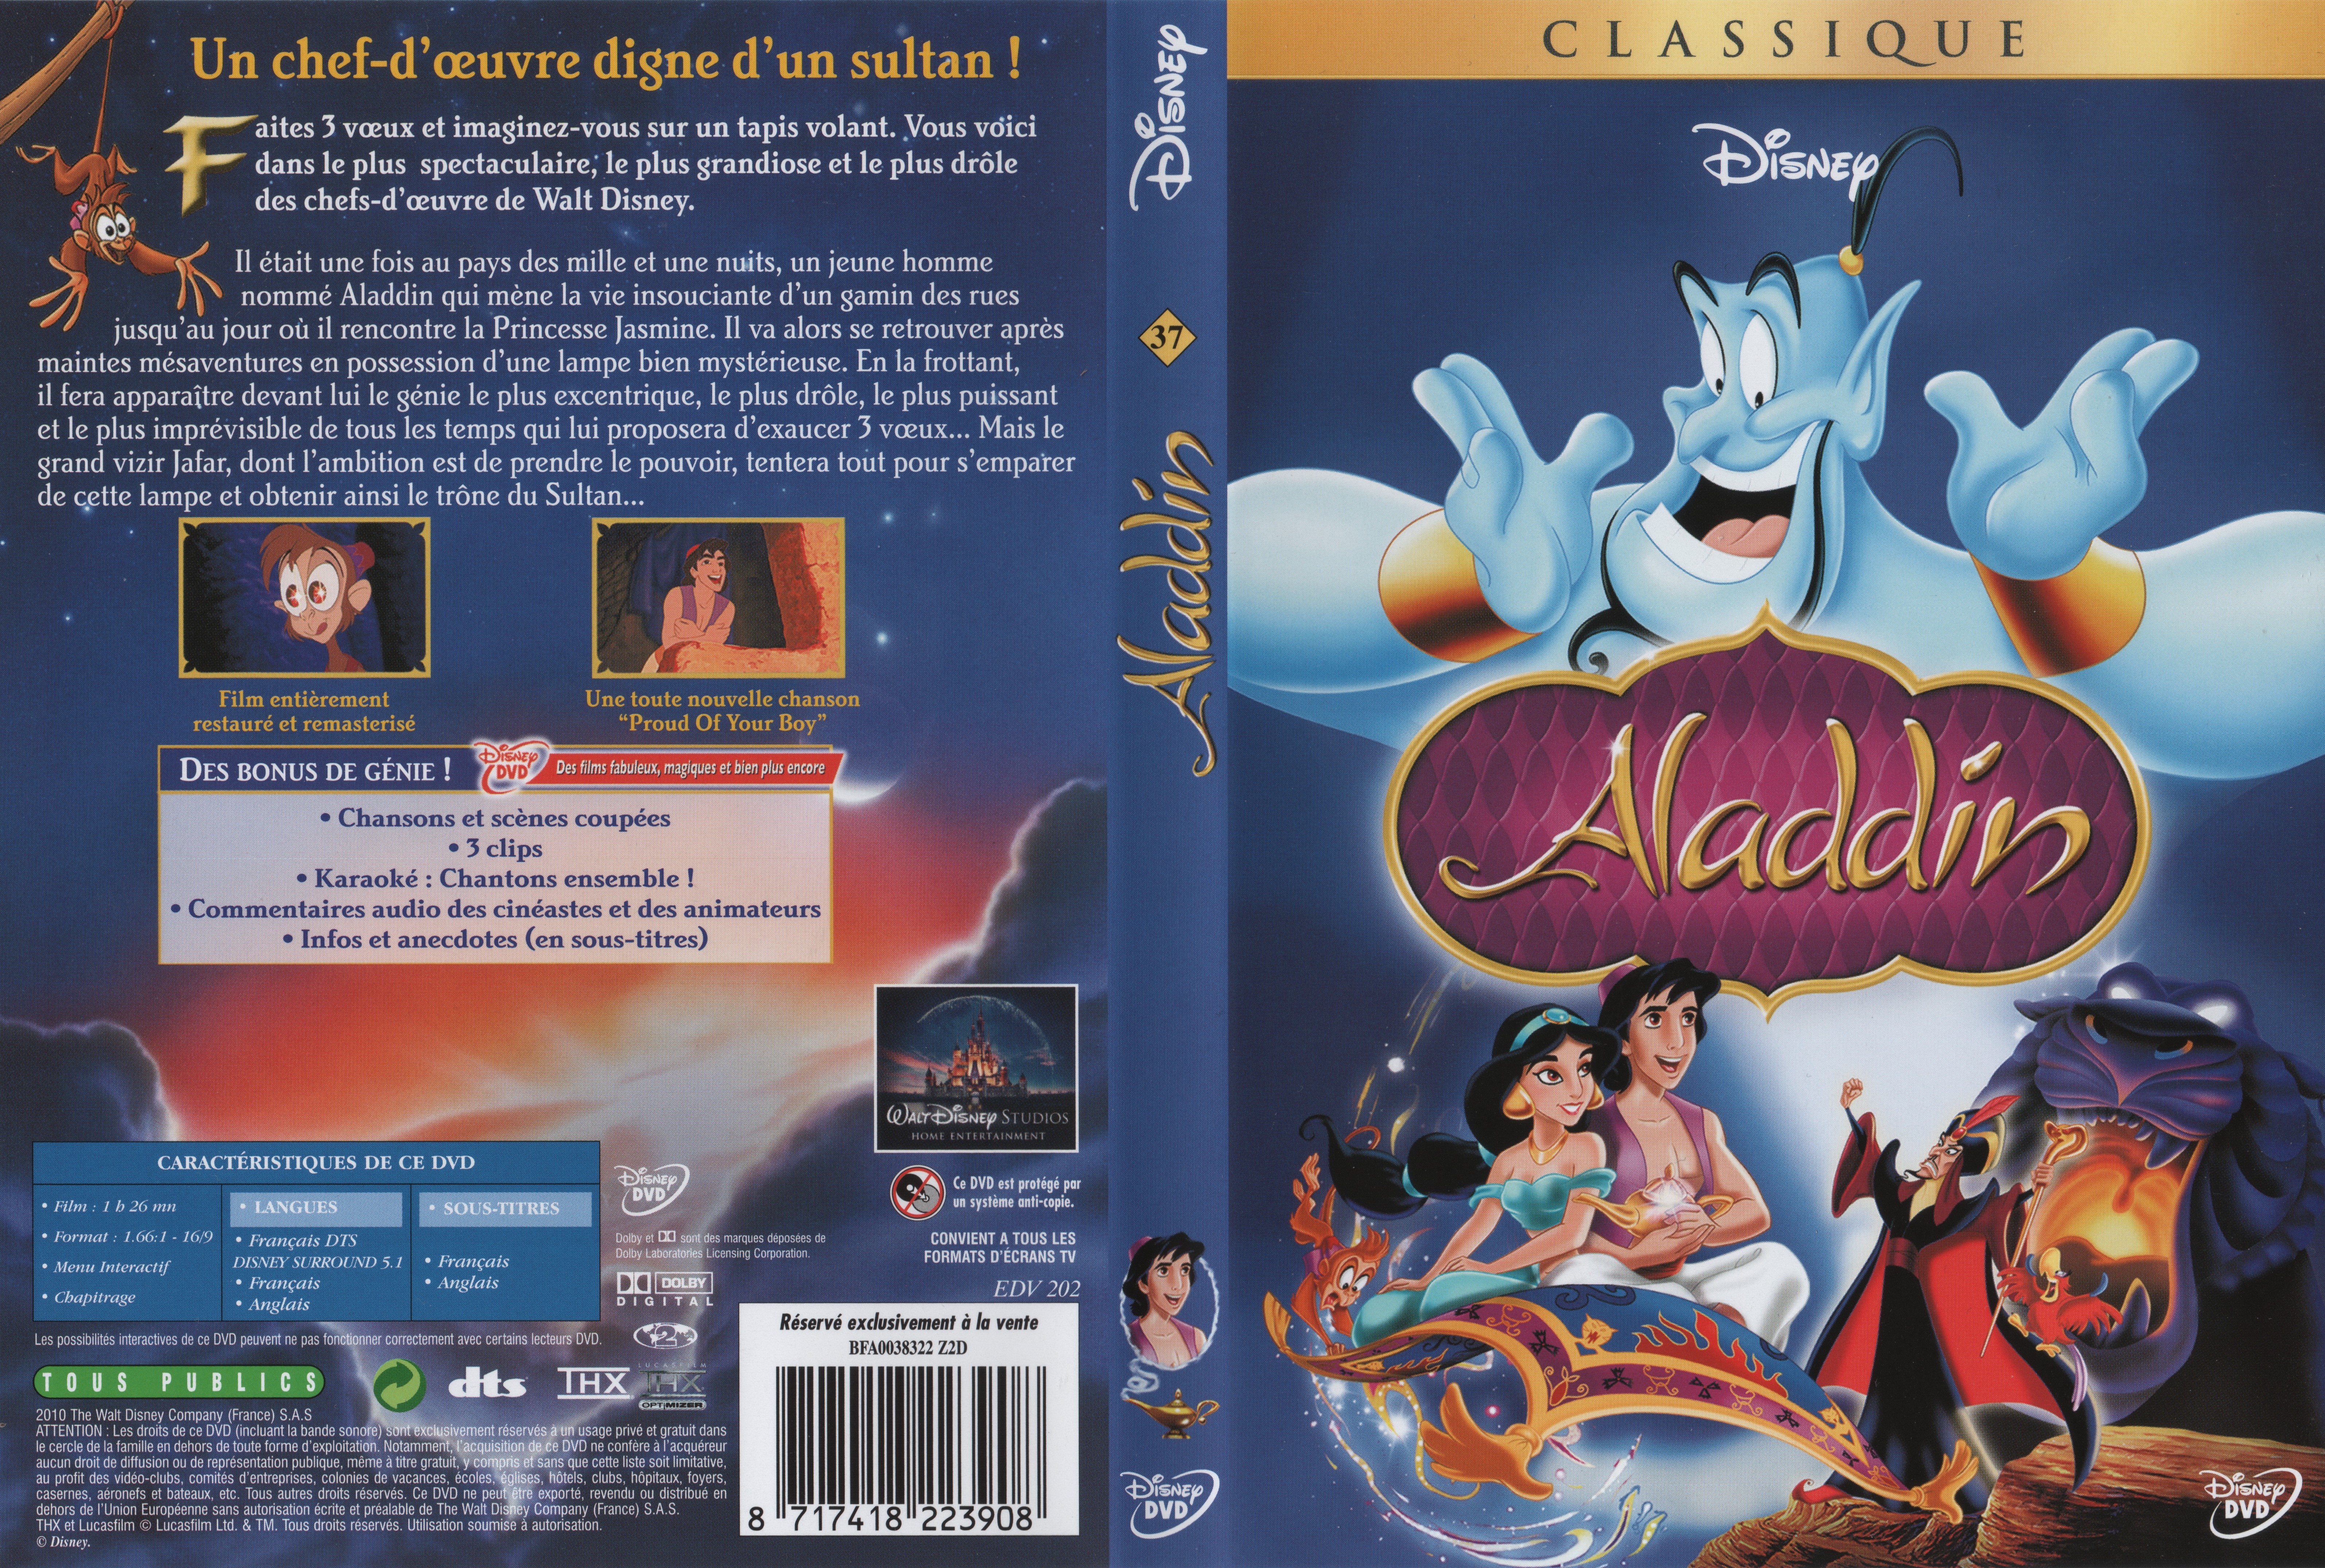 Jaquette DVD Aladdin v4